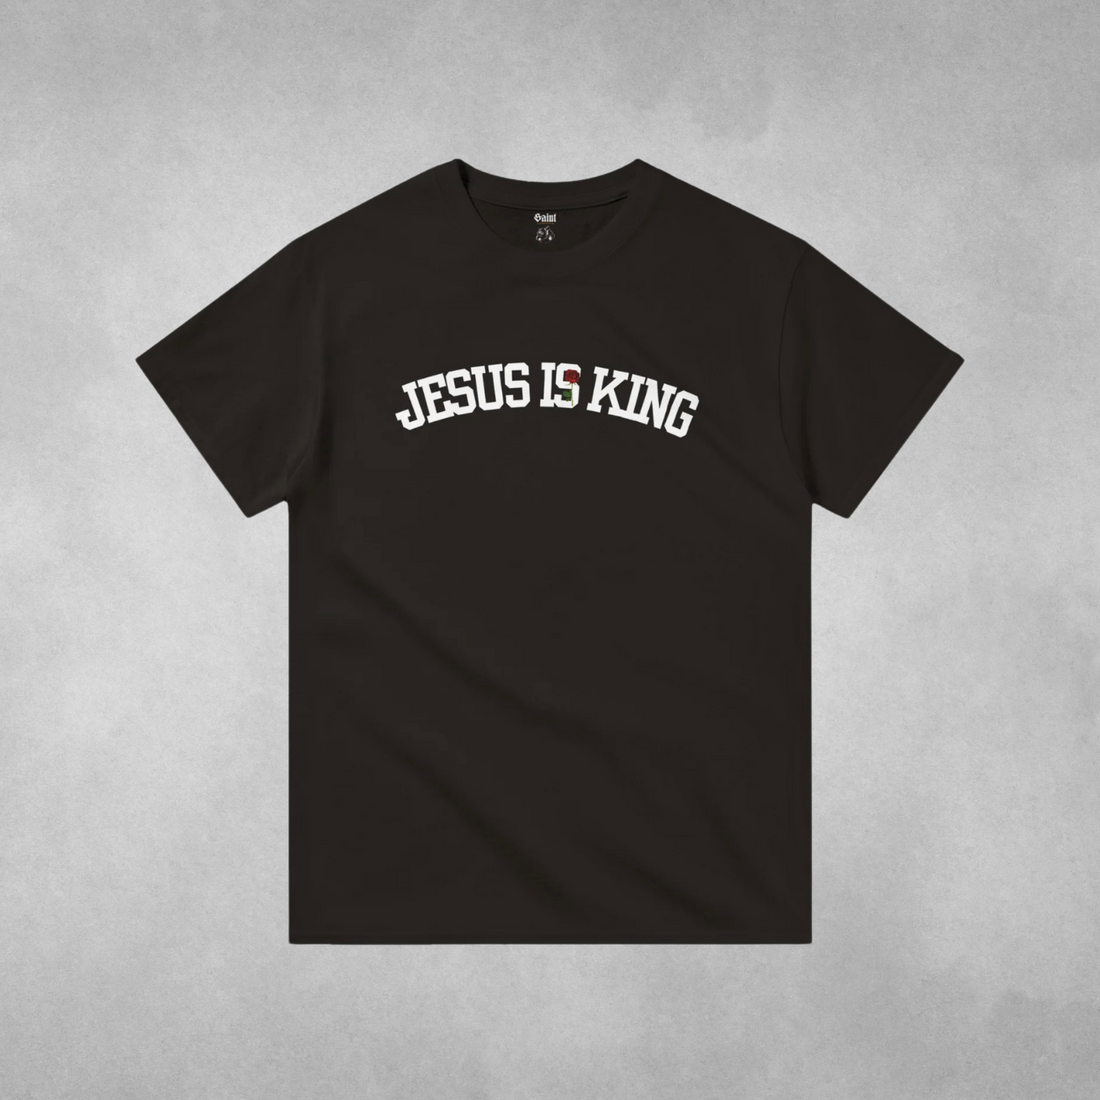 Jesus is King - Black Unisex Tshirt